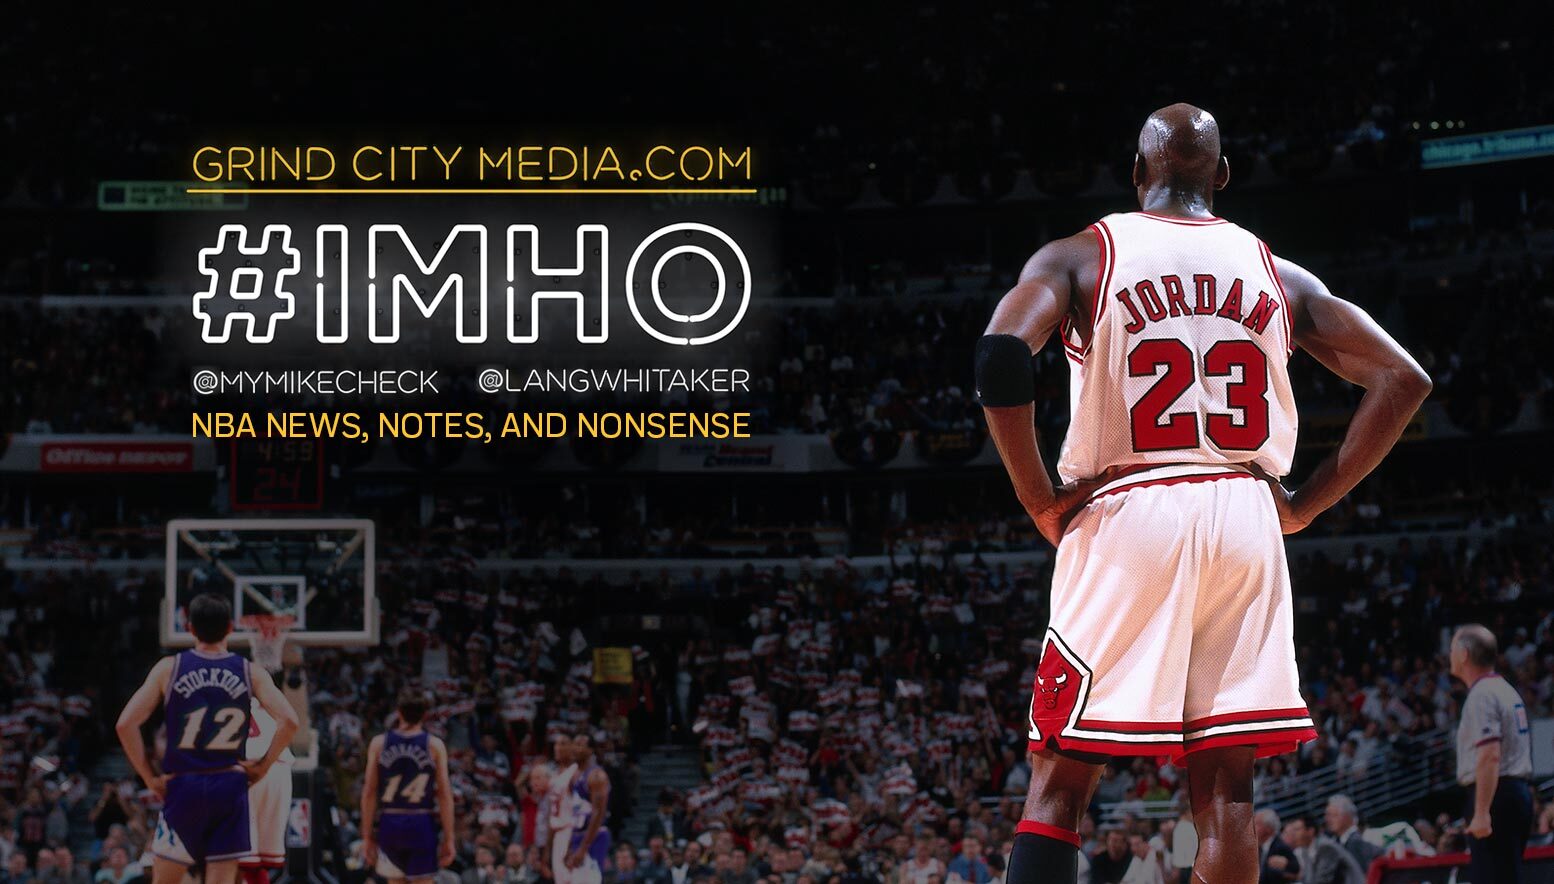 #IMHO: The Last Dance, Draymond and KD, plus NBA Awards